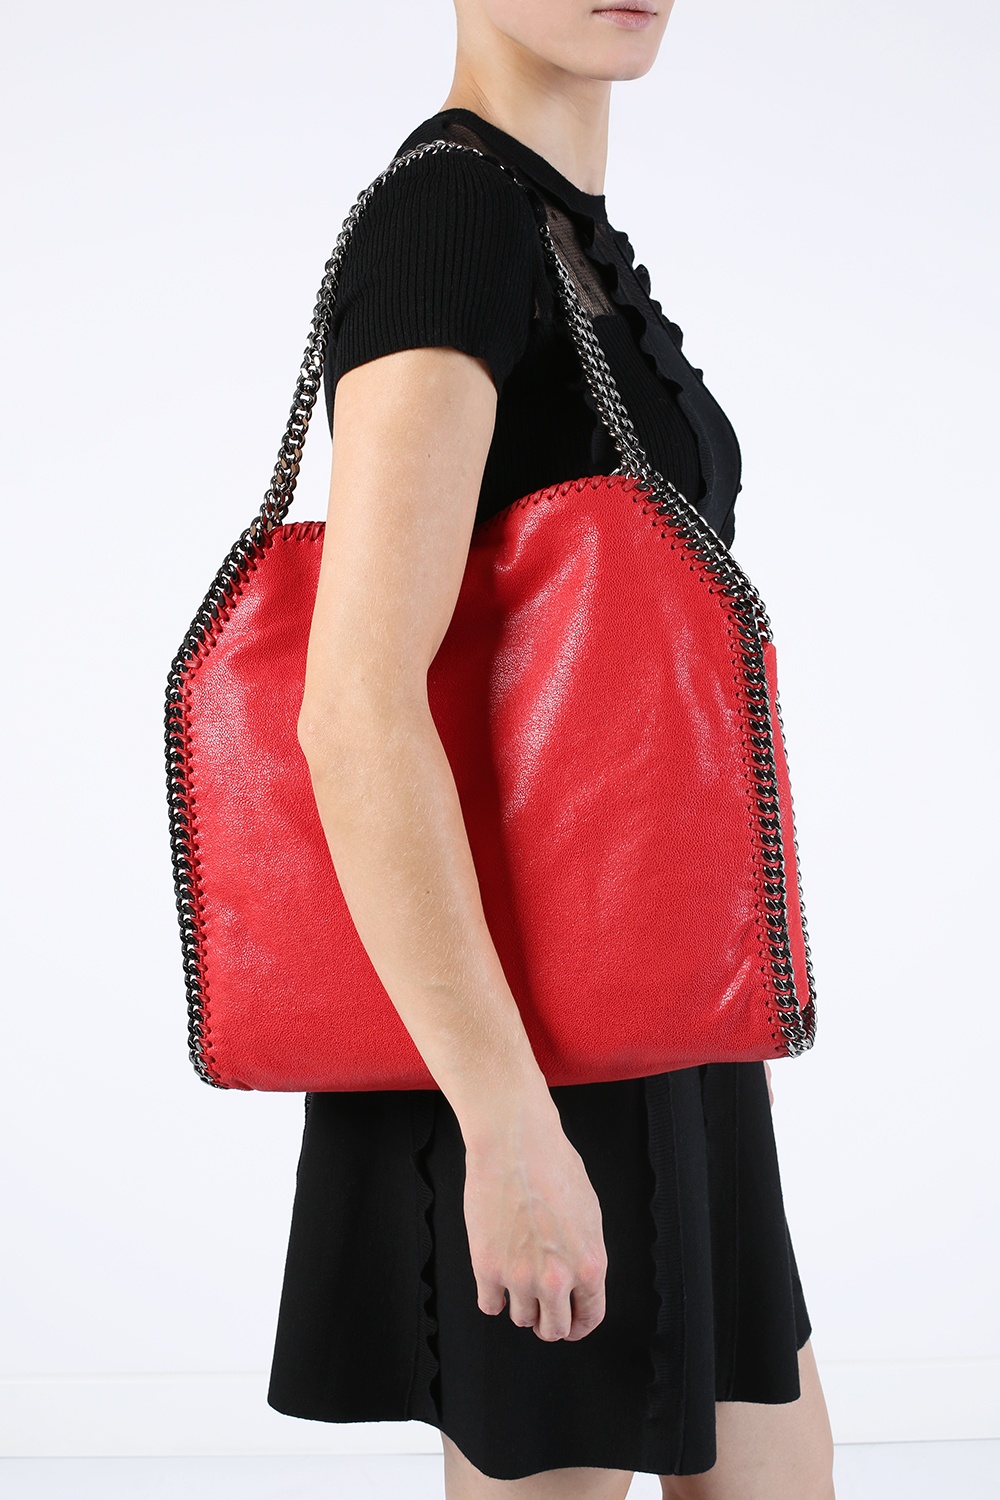 industri tyran Dam Red 'Falabella' shoulder bag Stella McCartney - Vitkac GB